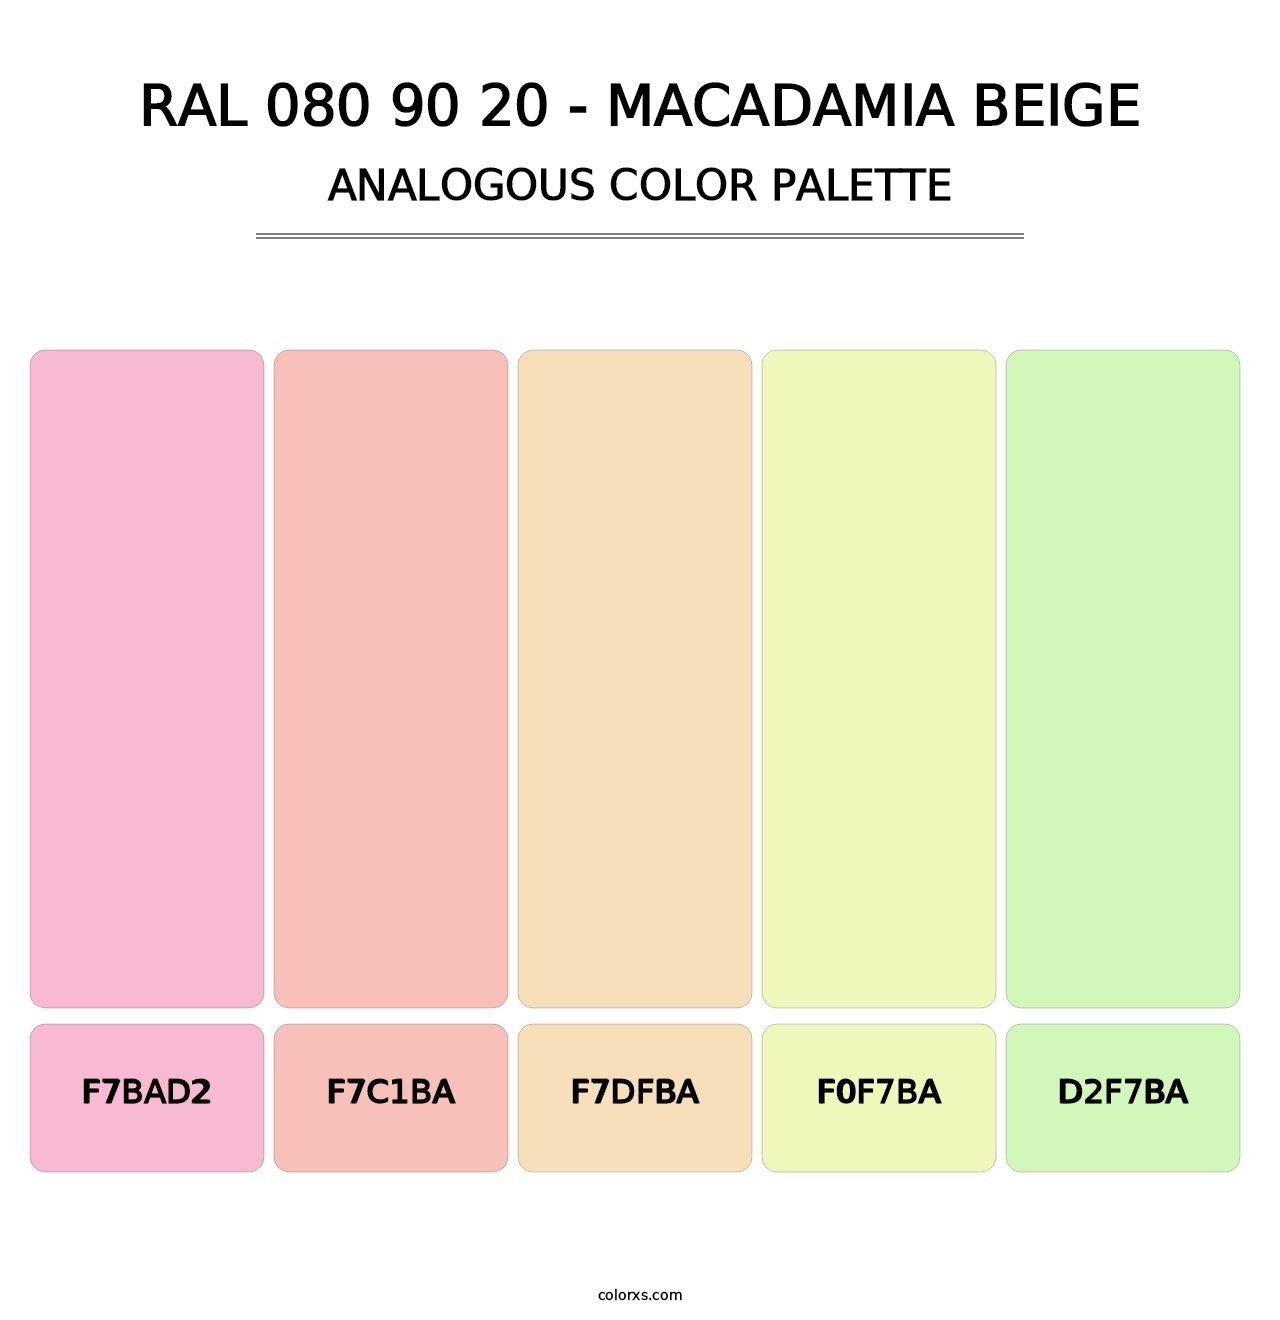 RAL 080 90 20 - Macadamia Beige - Analogous Color Palette